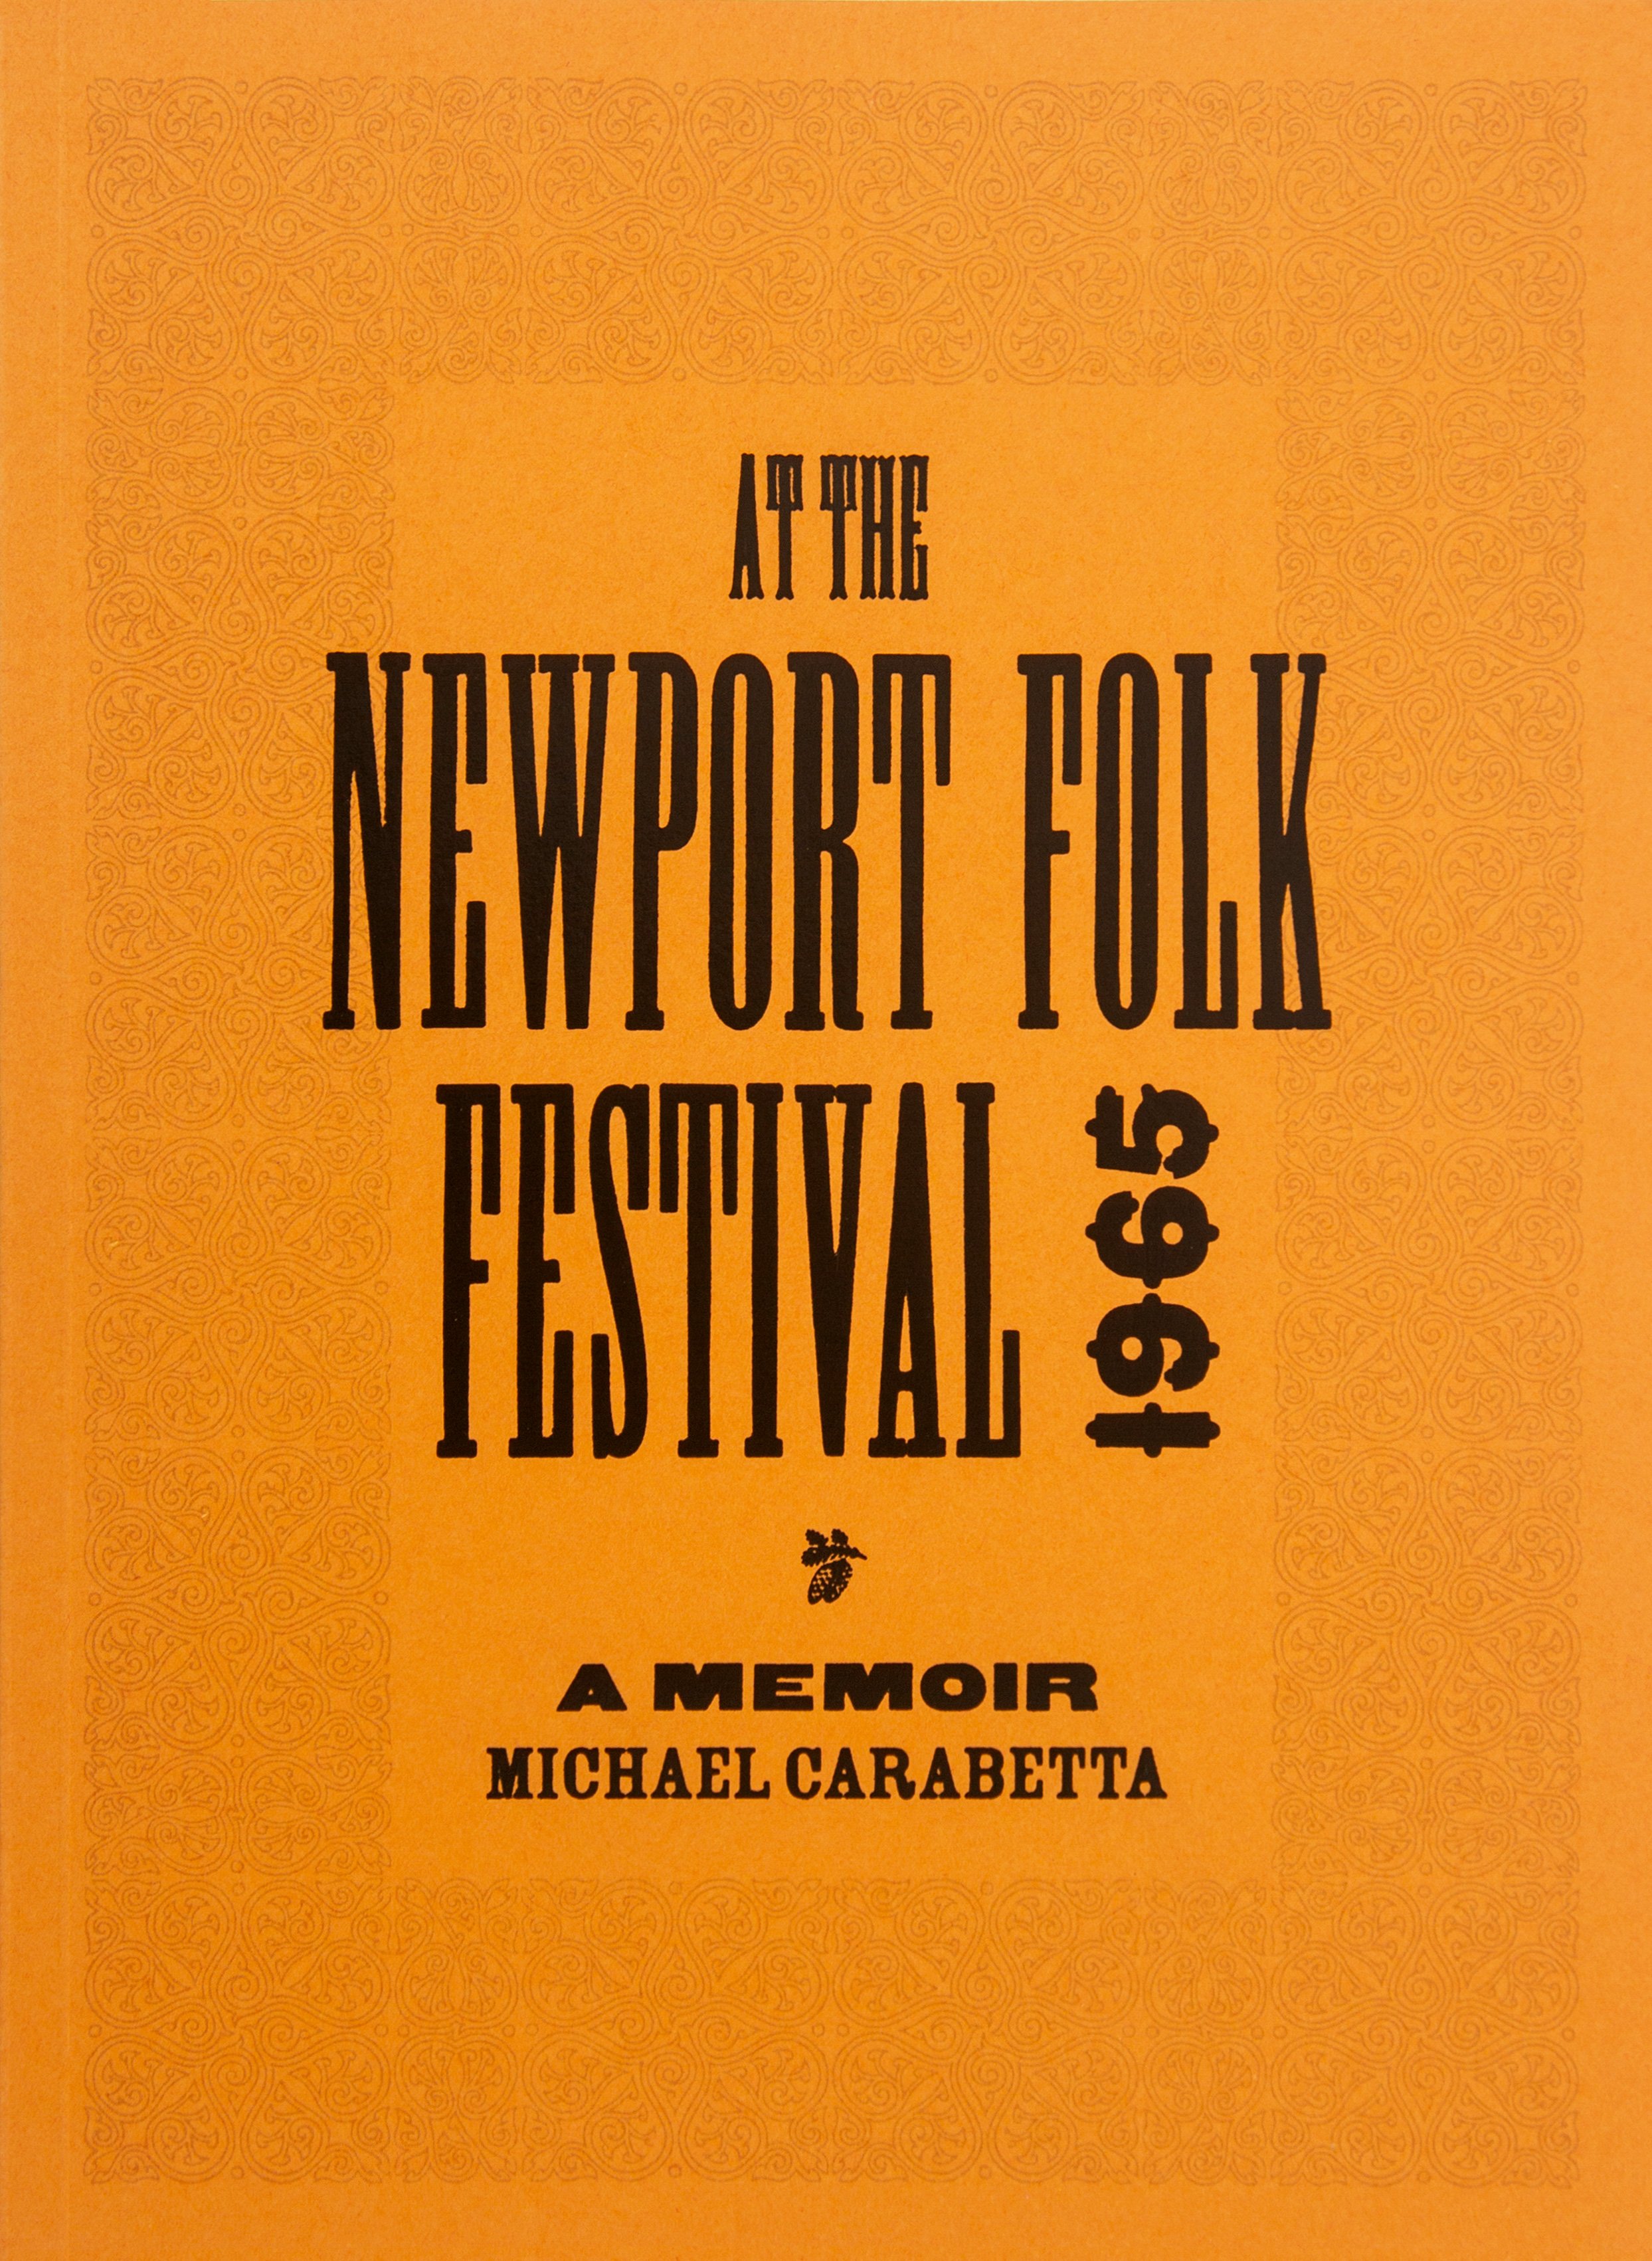 Newport_cover_0676.jpg